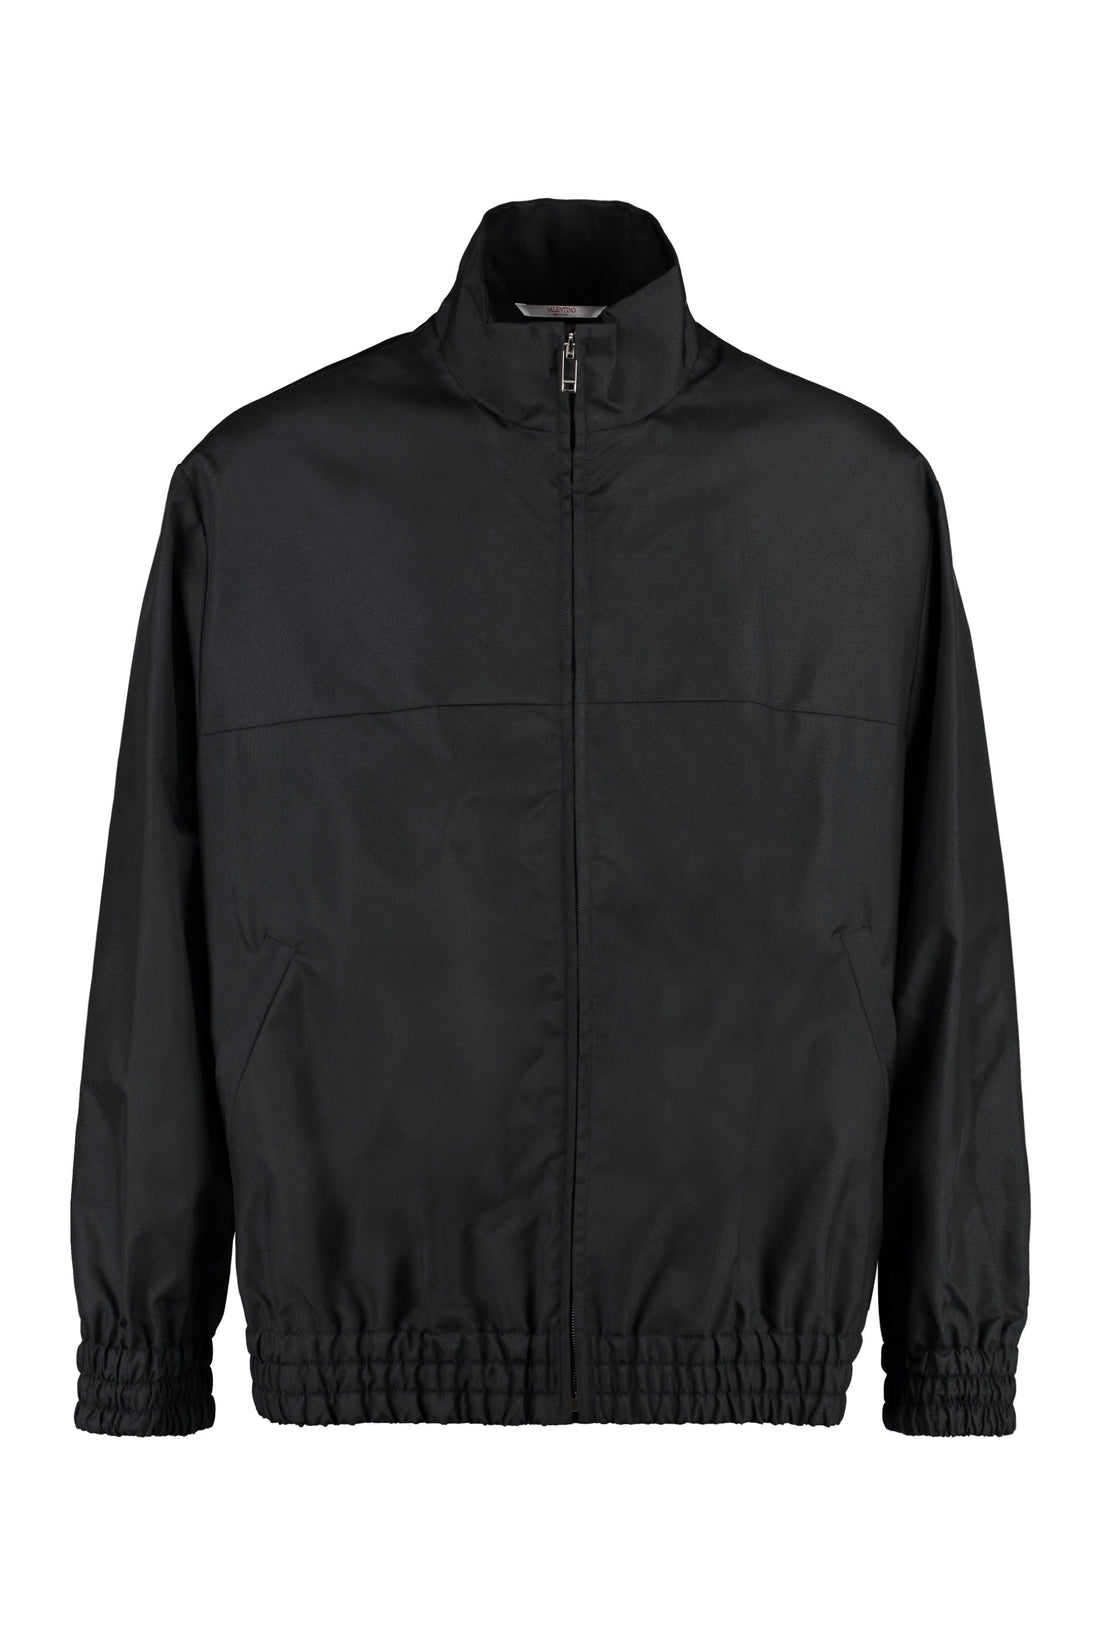 Valentino-OUTLET-SALE-Nylon jacket-ARCHIVIST